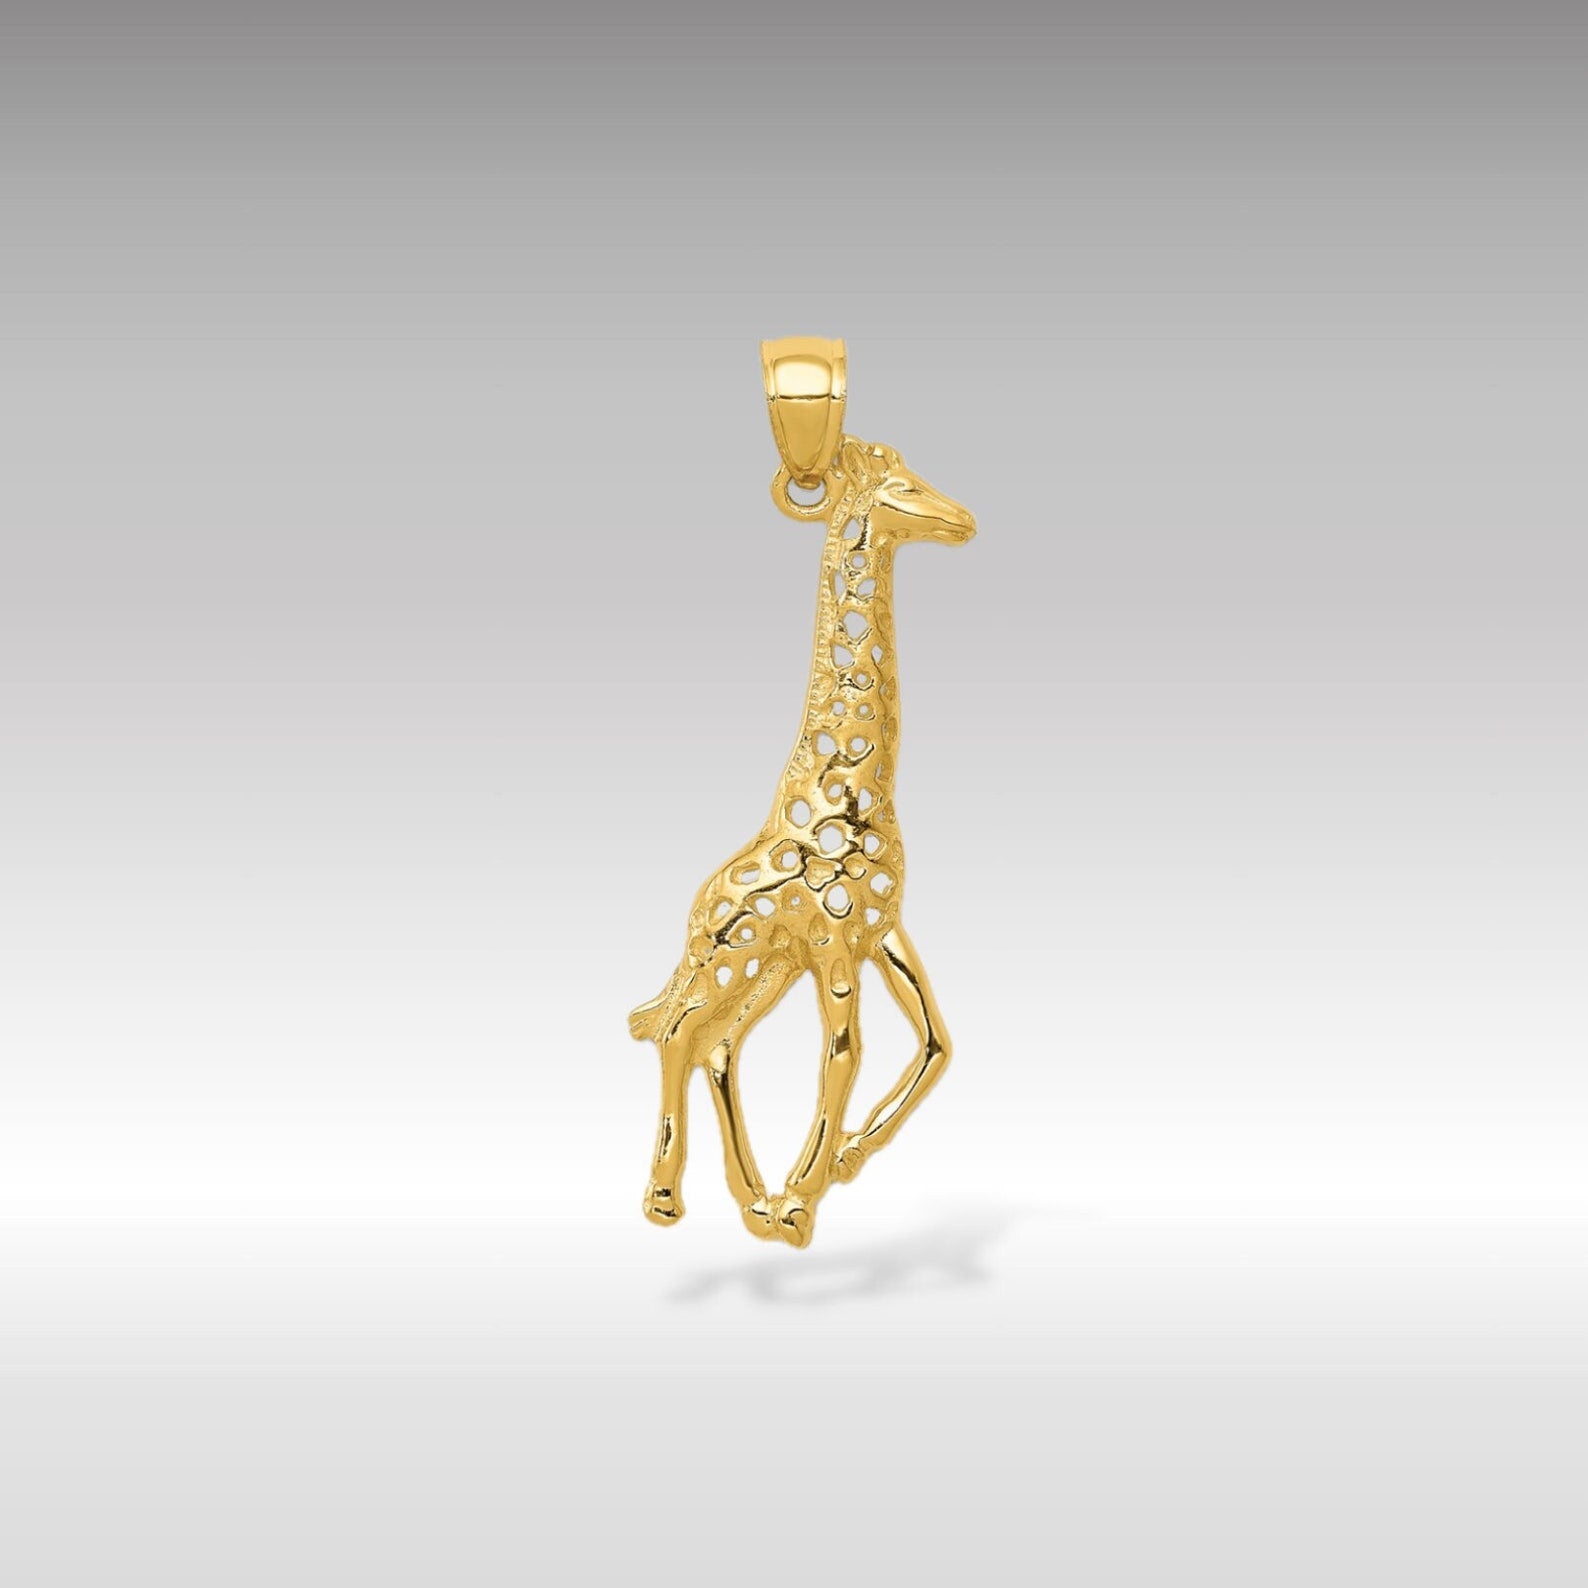 Gold Giraffe Pendant Model-C3530 - Charlie & Co. Jewelry